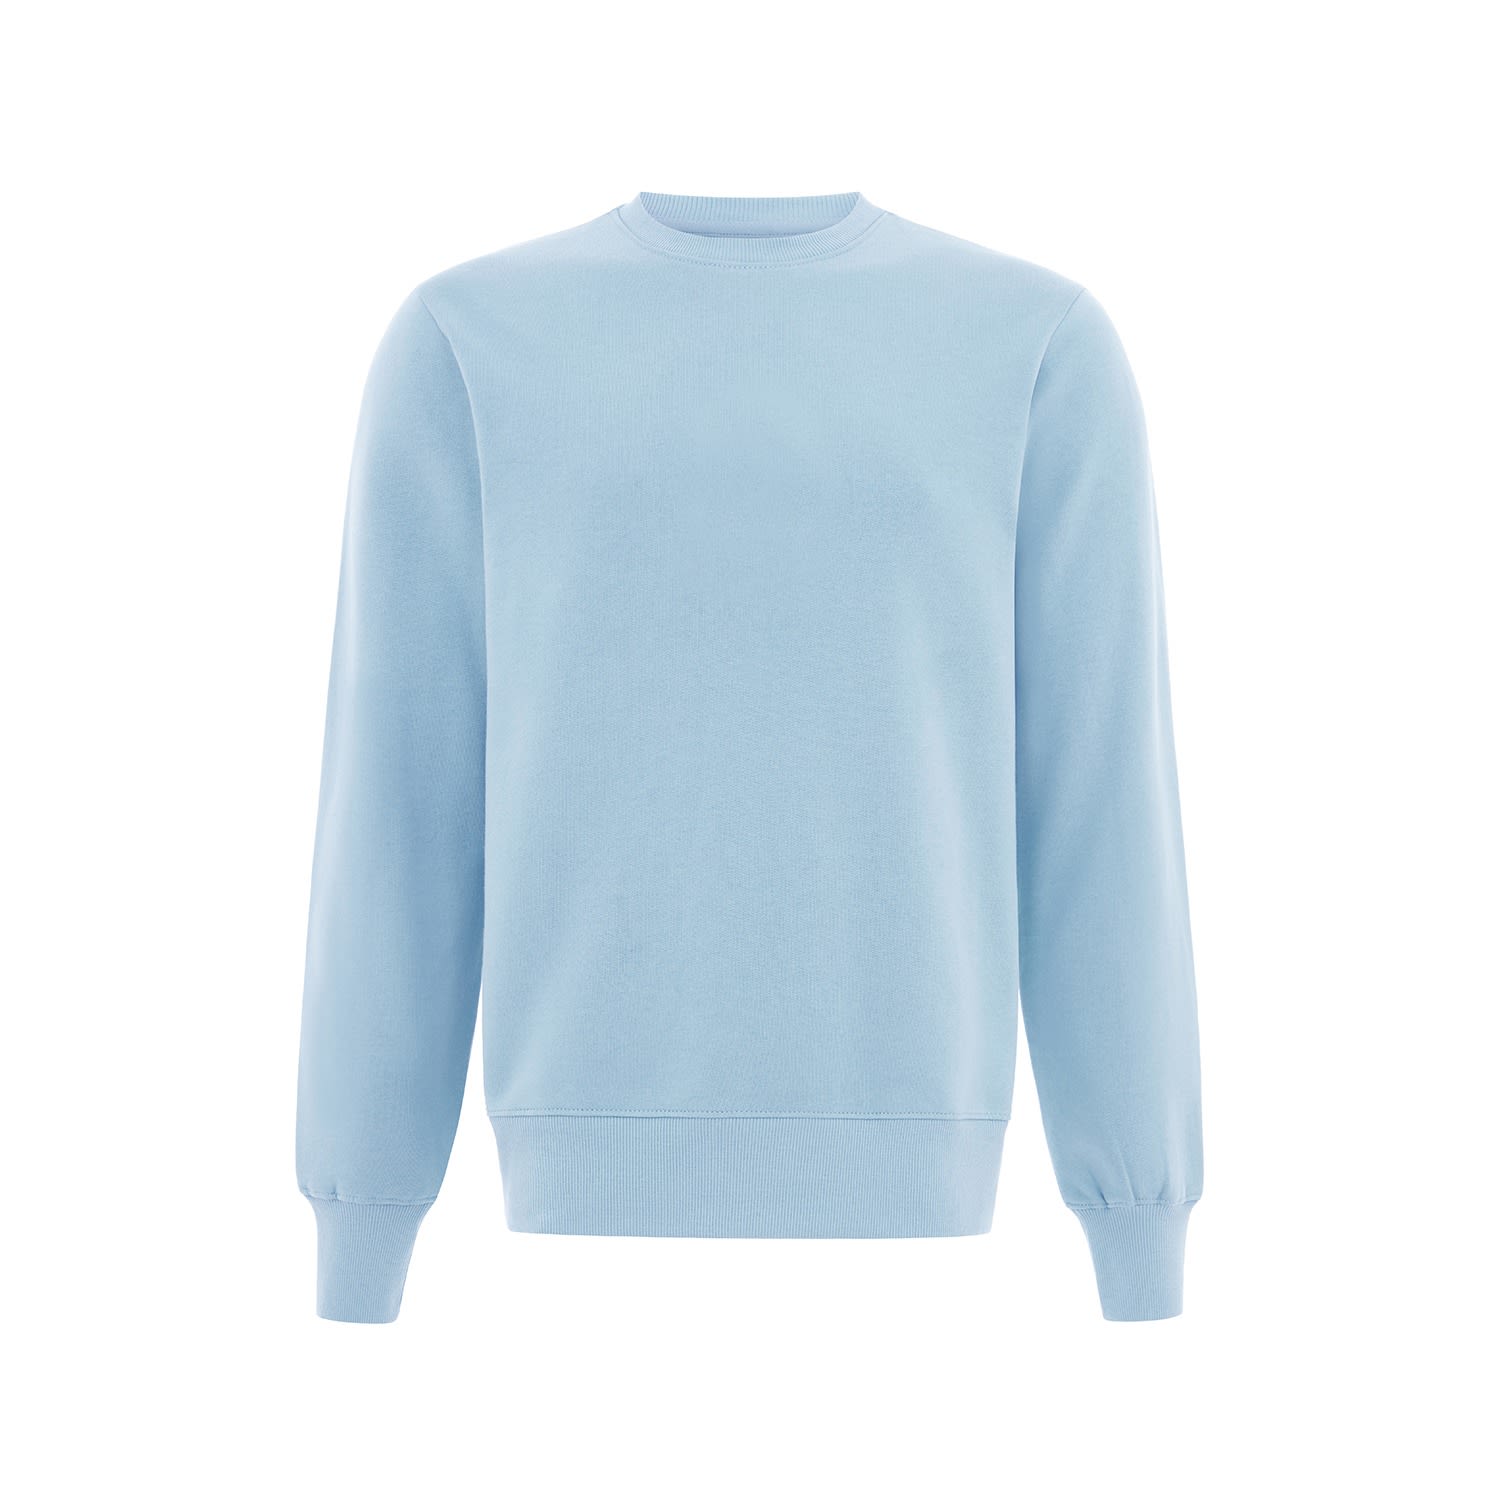 The Og Soft Organic Cotton Mens Sweatshirt In Light Blue Large blonde gone rogue